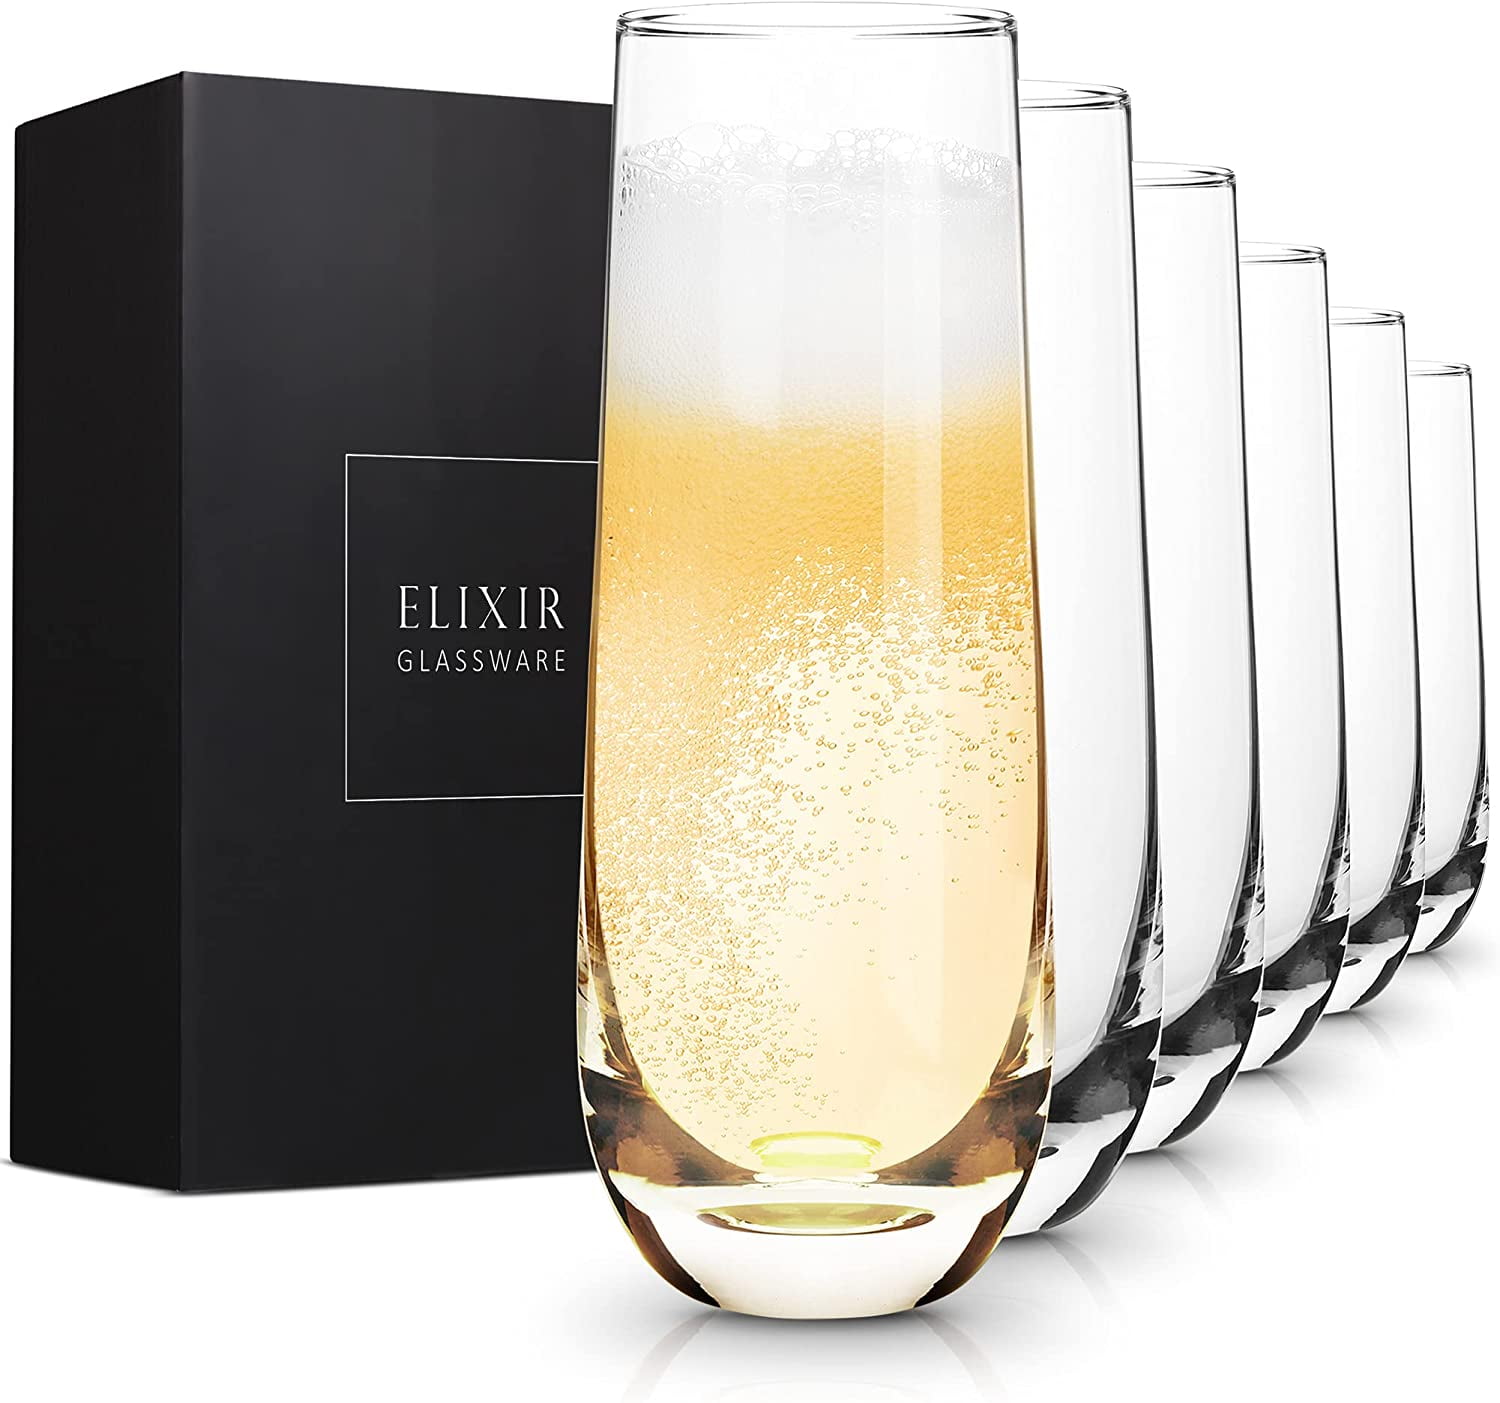 UMI UMIZILI Classic Champagne Flutes, Set of 12, 6 Oz Premium Stemmed  Champagne Glasses, Sparkling Wine Glass, Crystal Clear